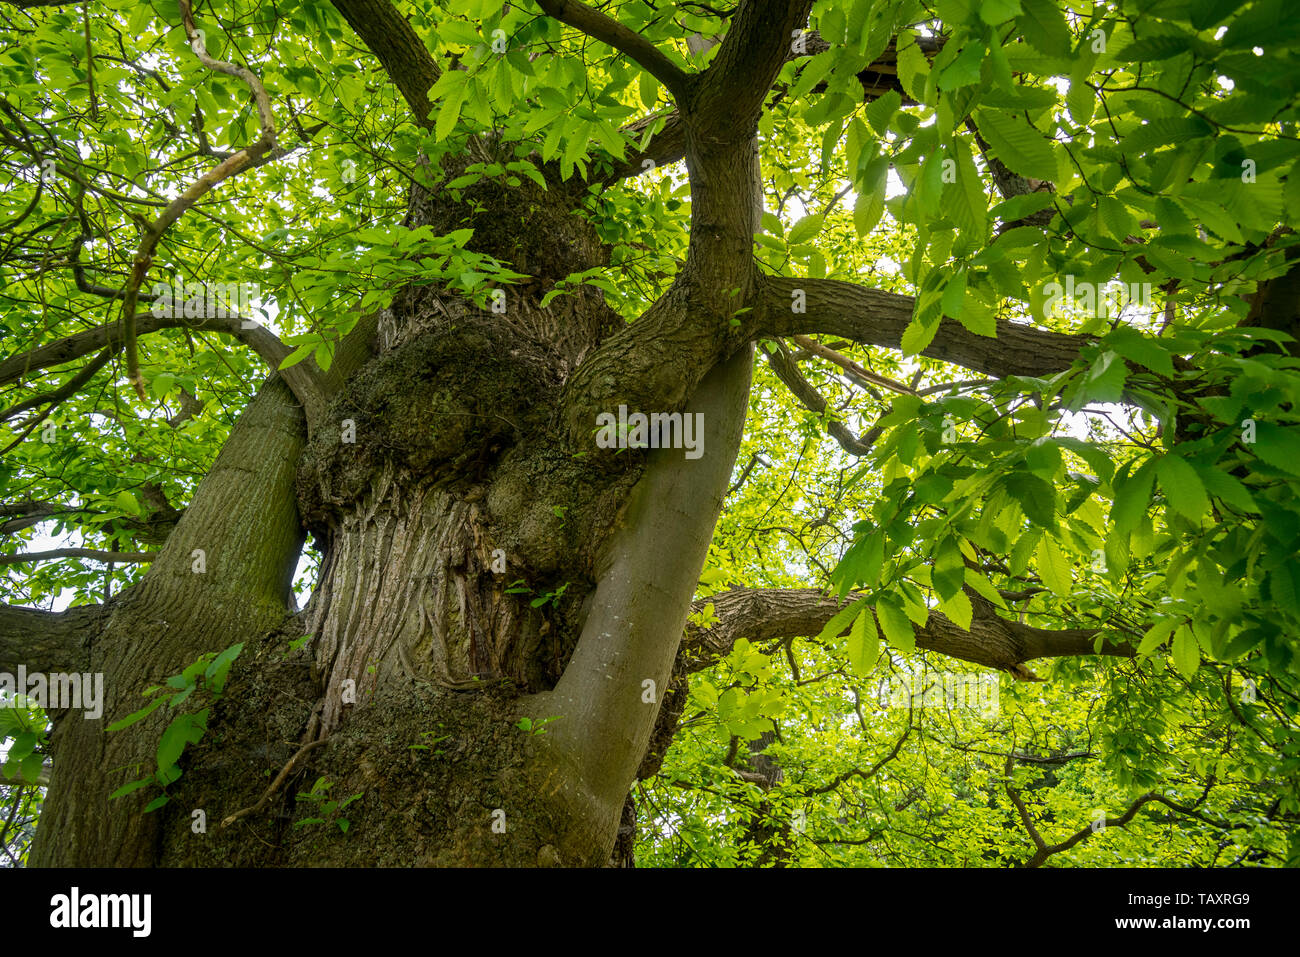 Sweet chestnut (Castanea sativa) close-up of tree trunk and foliage Stock Photo